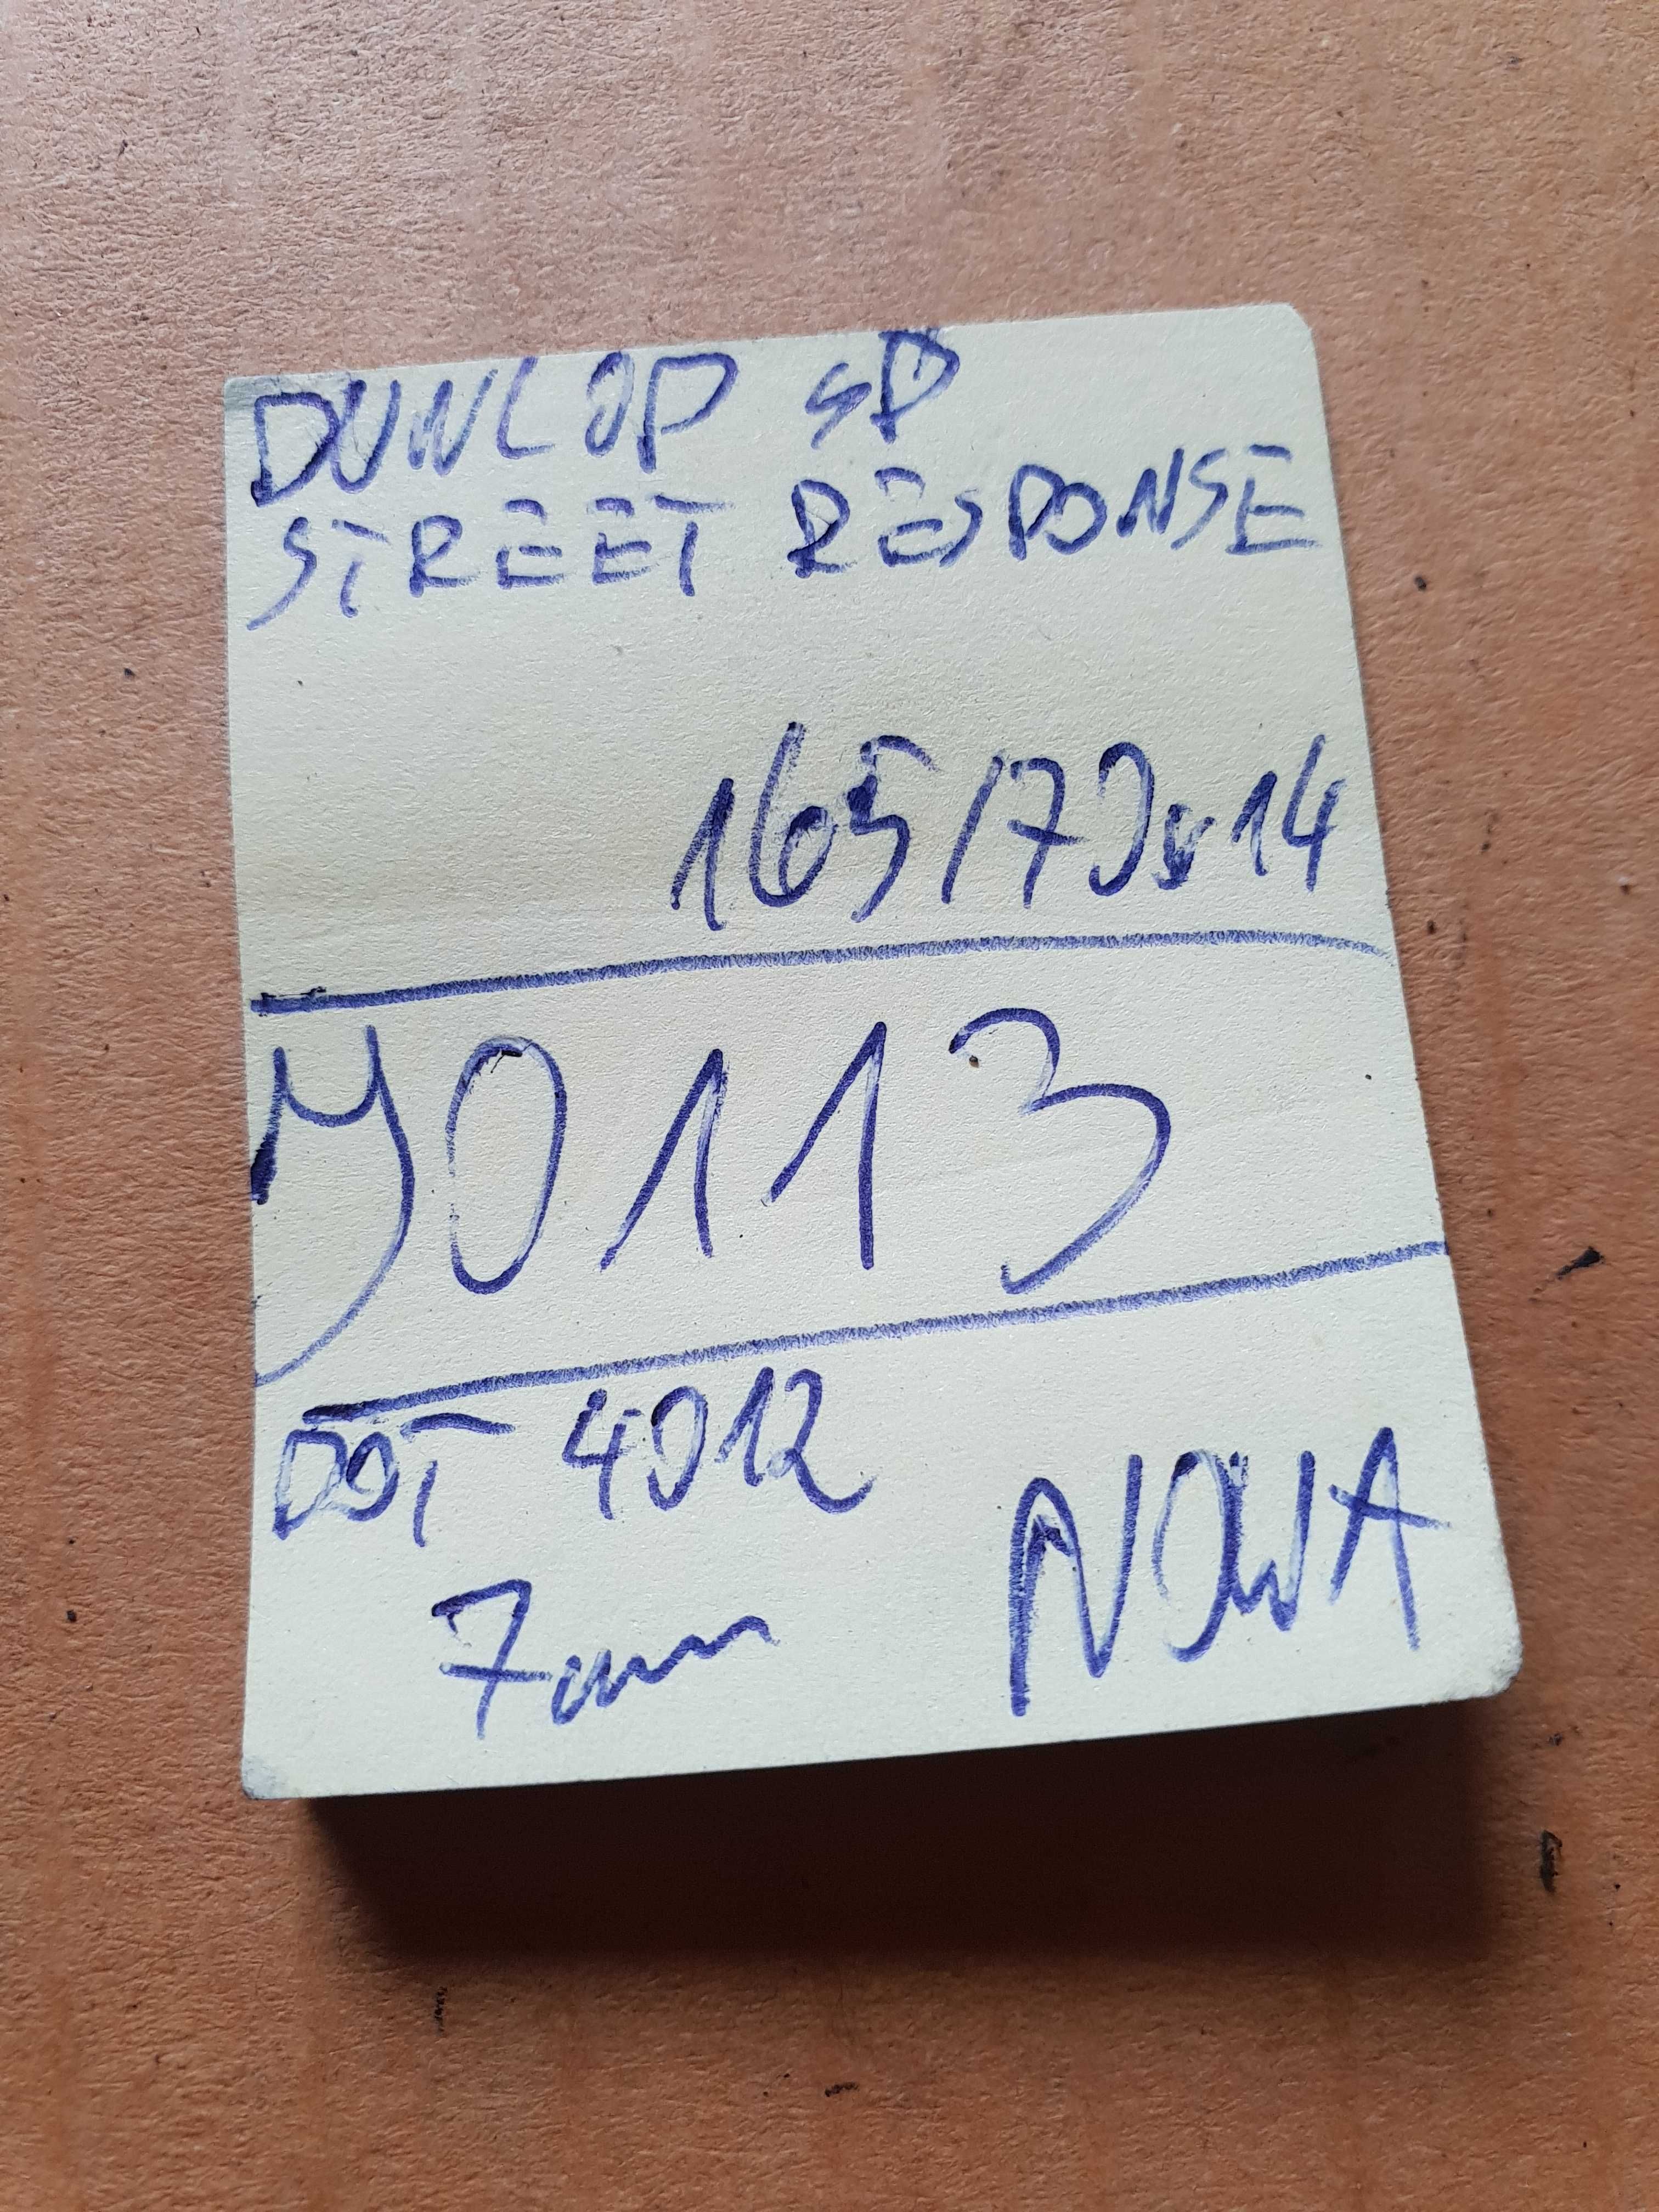 Dunlop 165/70 r14 SP StreetResponse NOWA / 7mm!!!